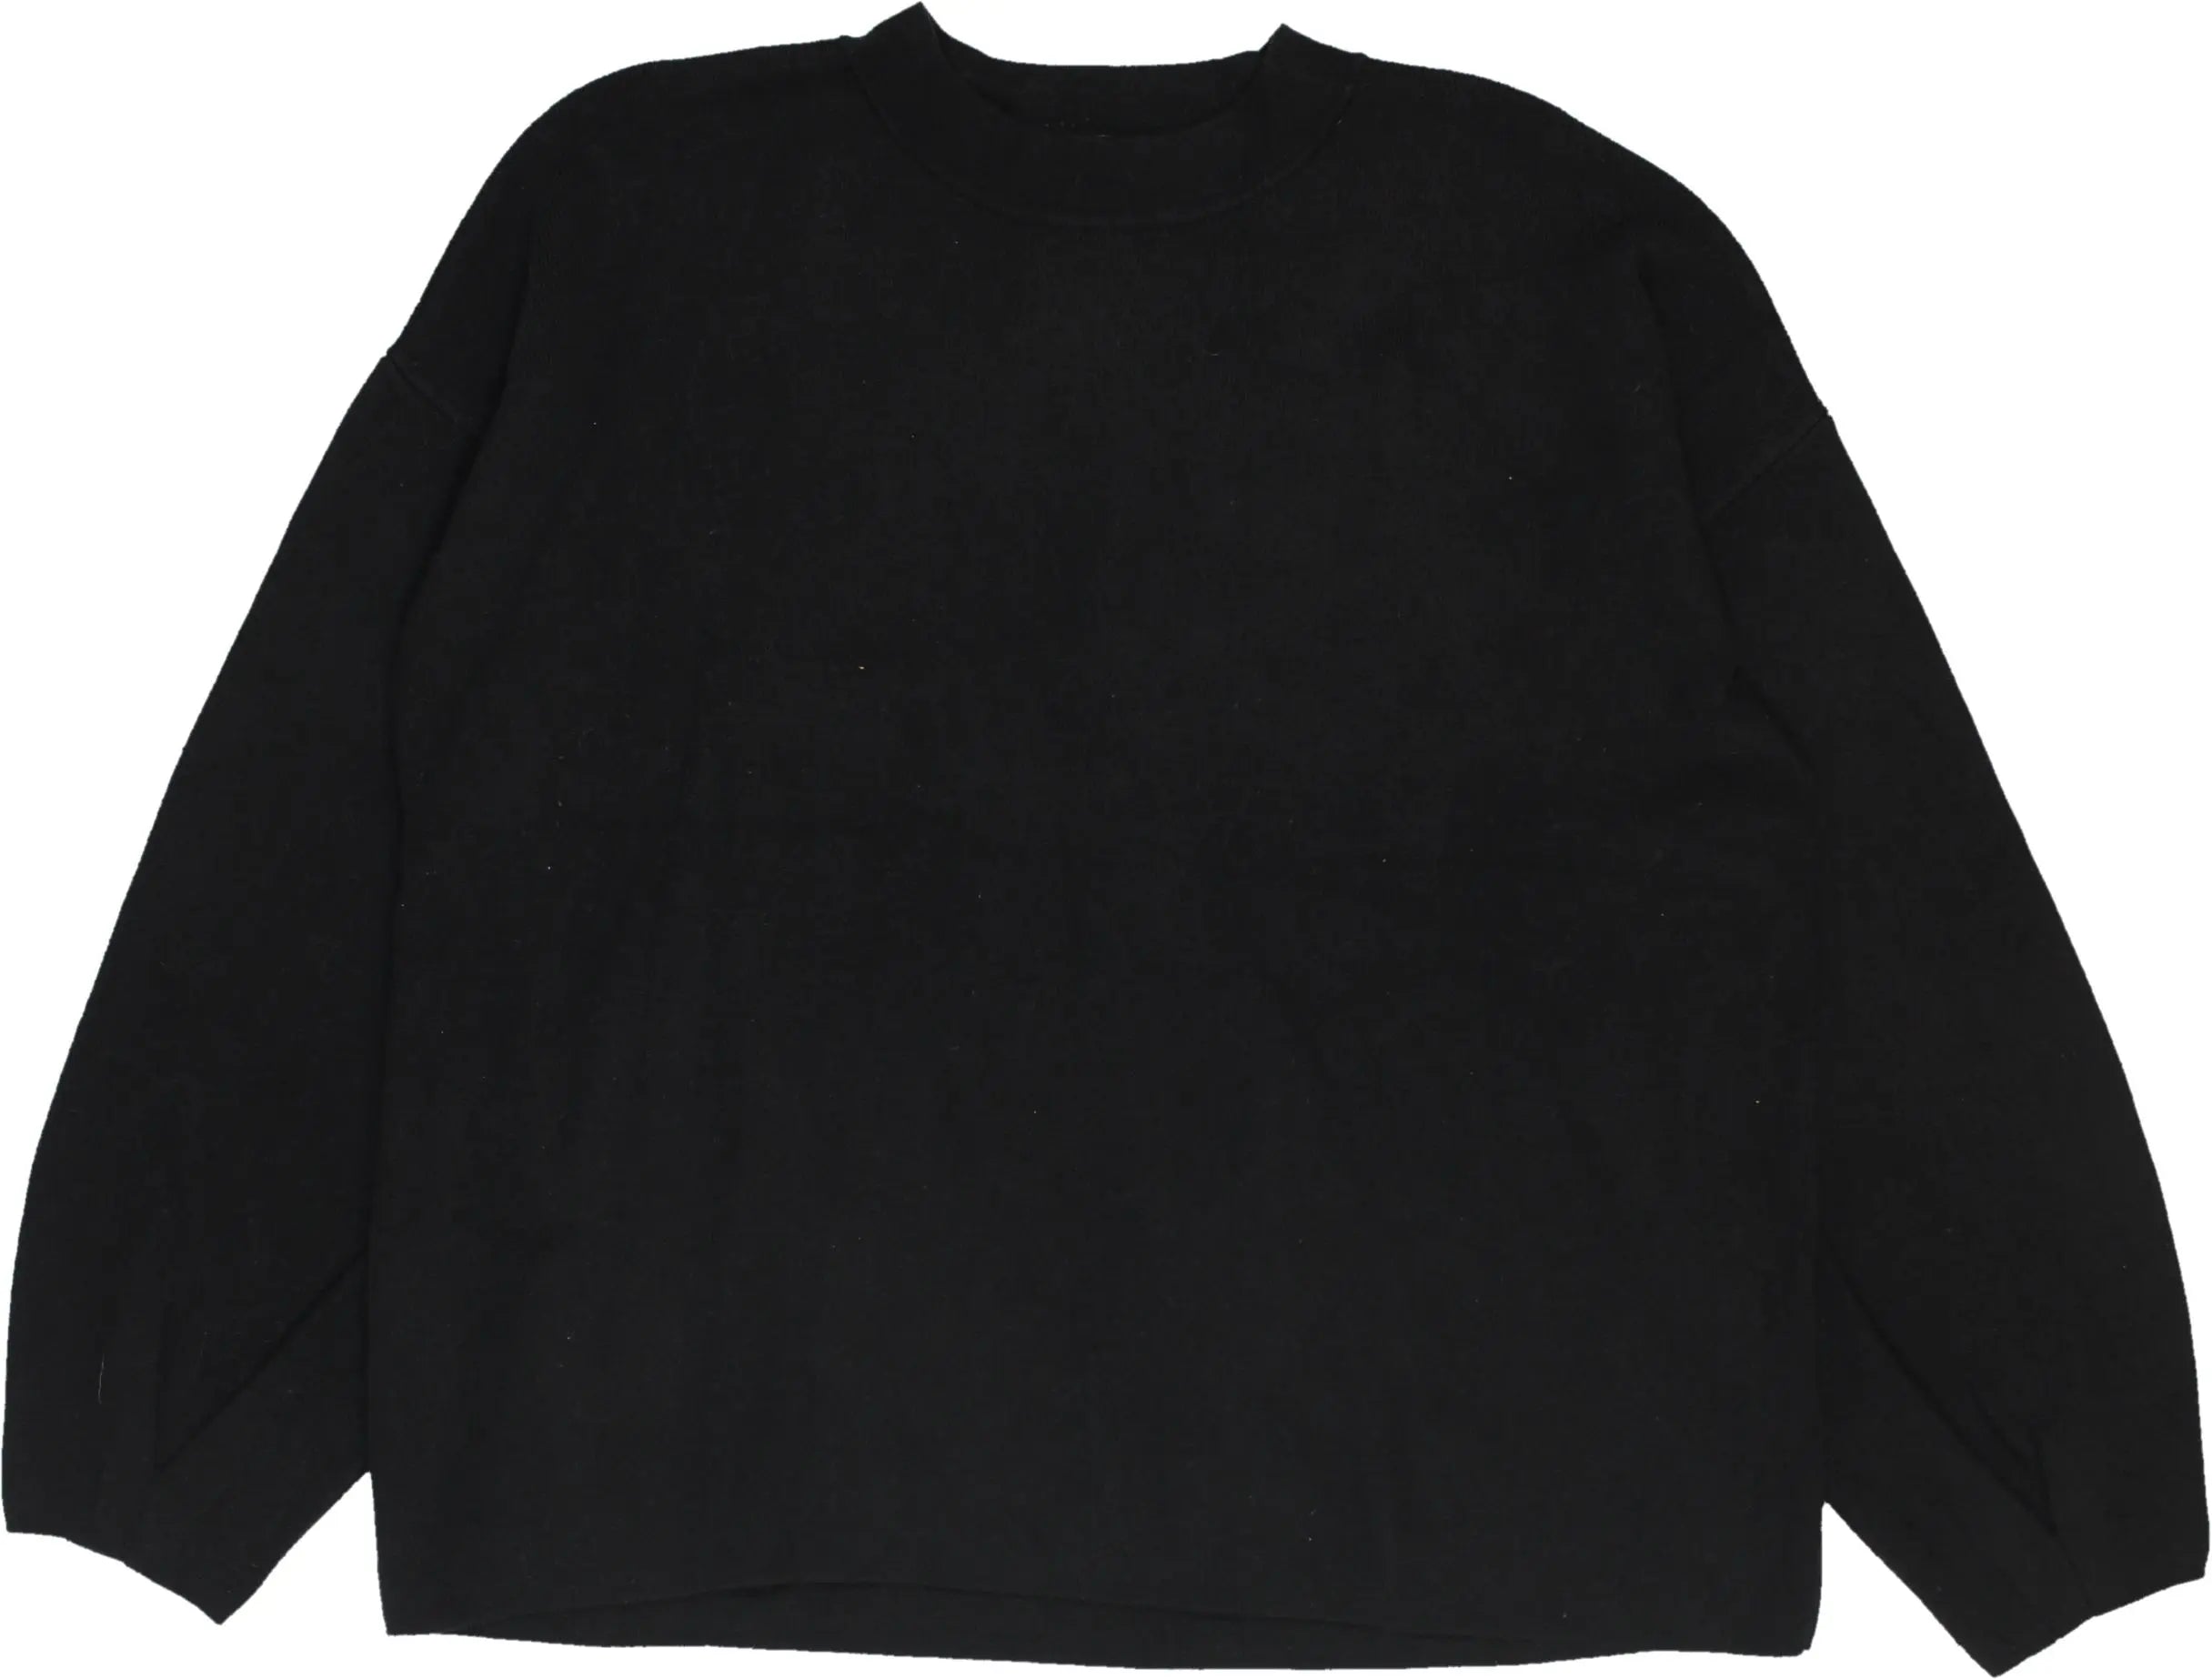 Esprit - Plain Black Jumper- ThriftTale.com - Vintage and second handclothing